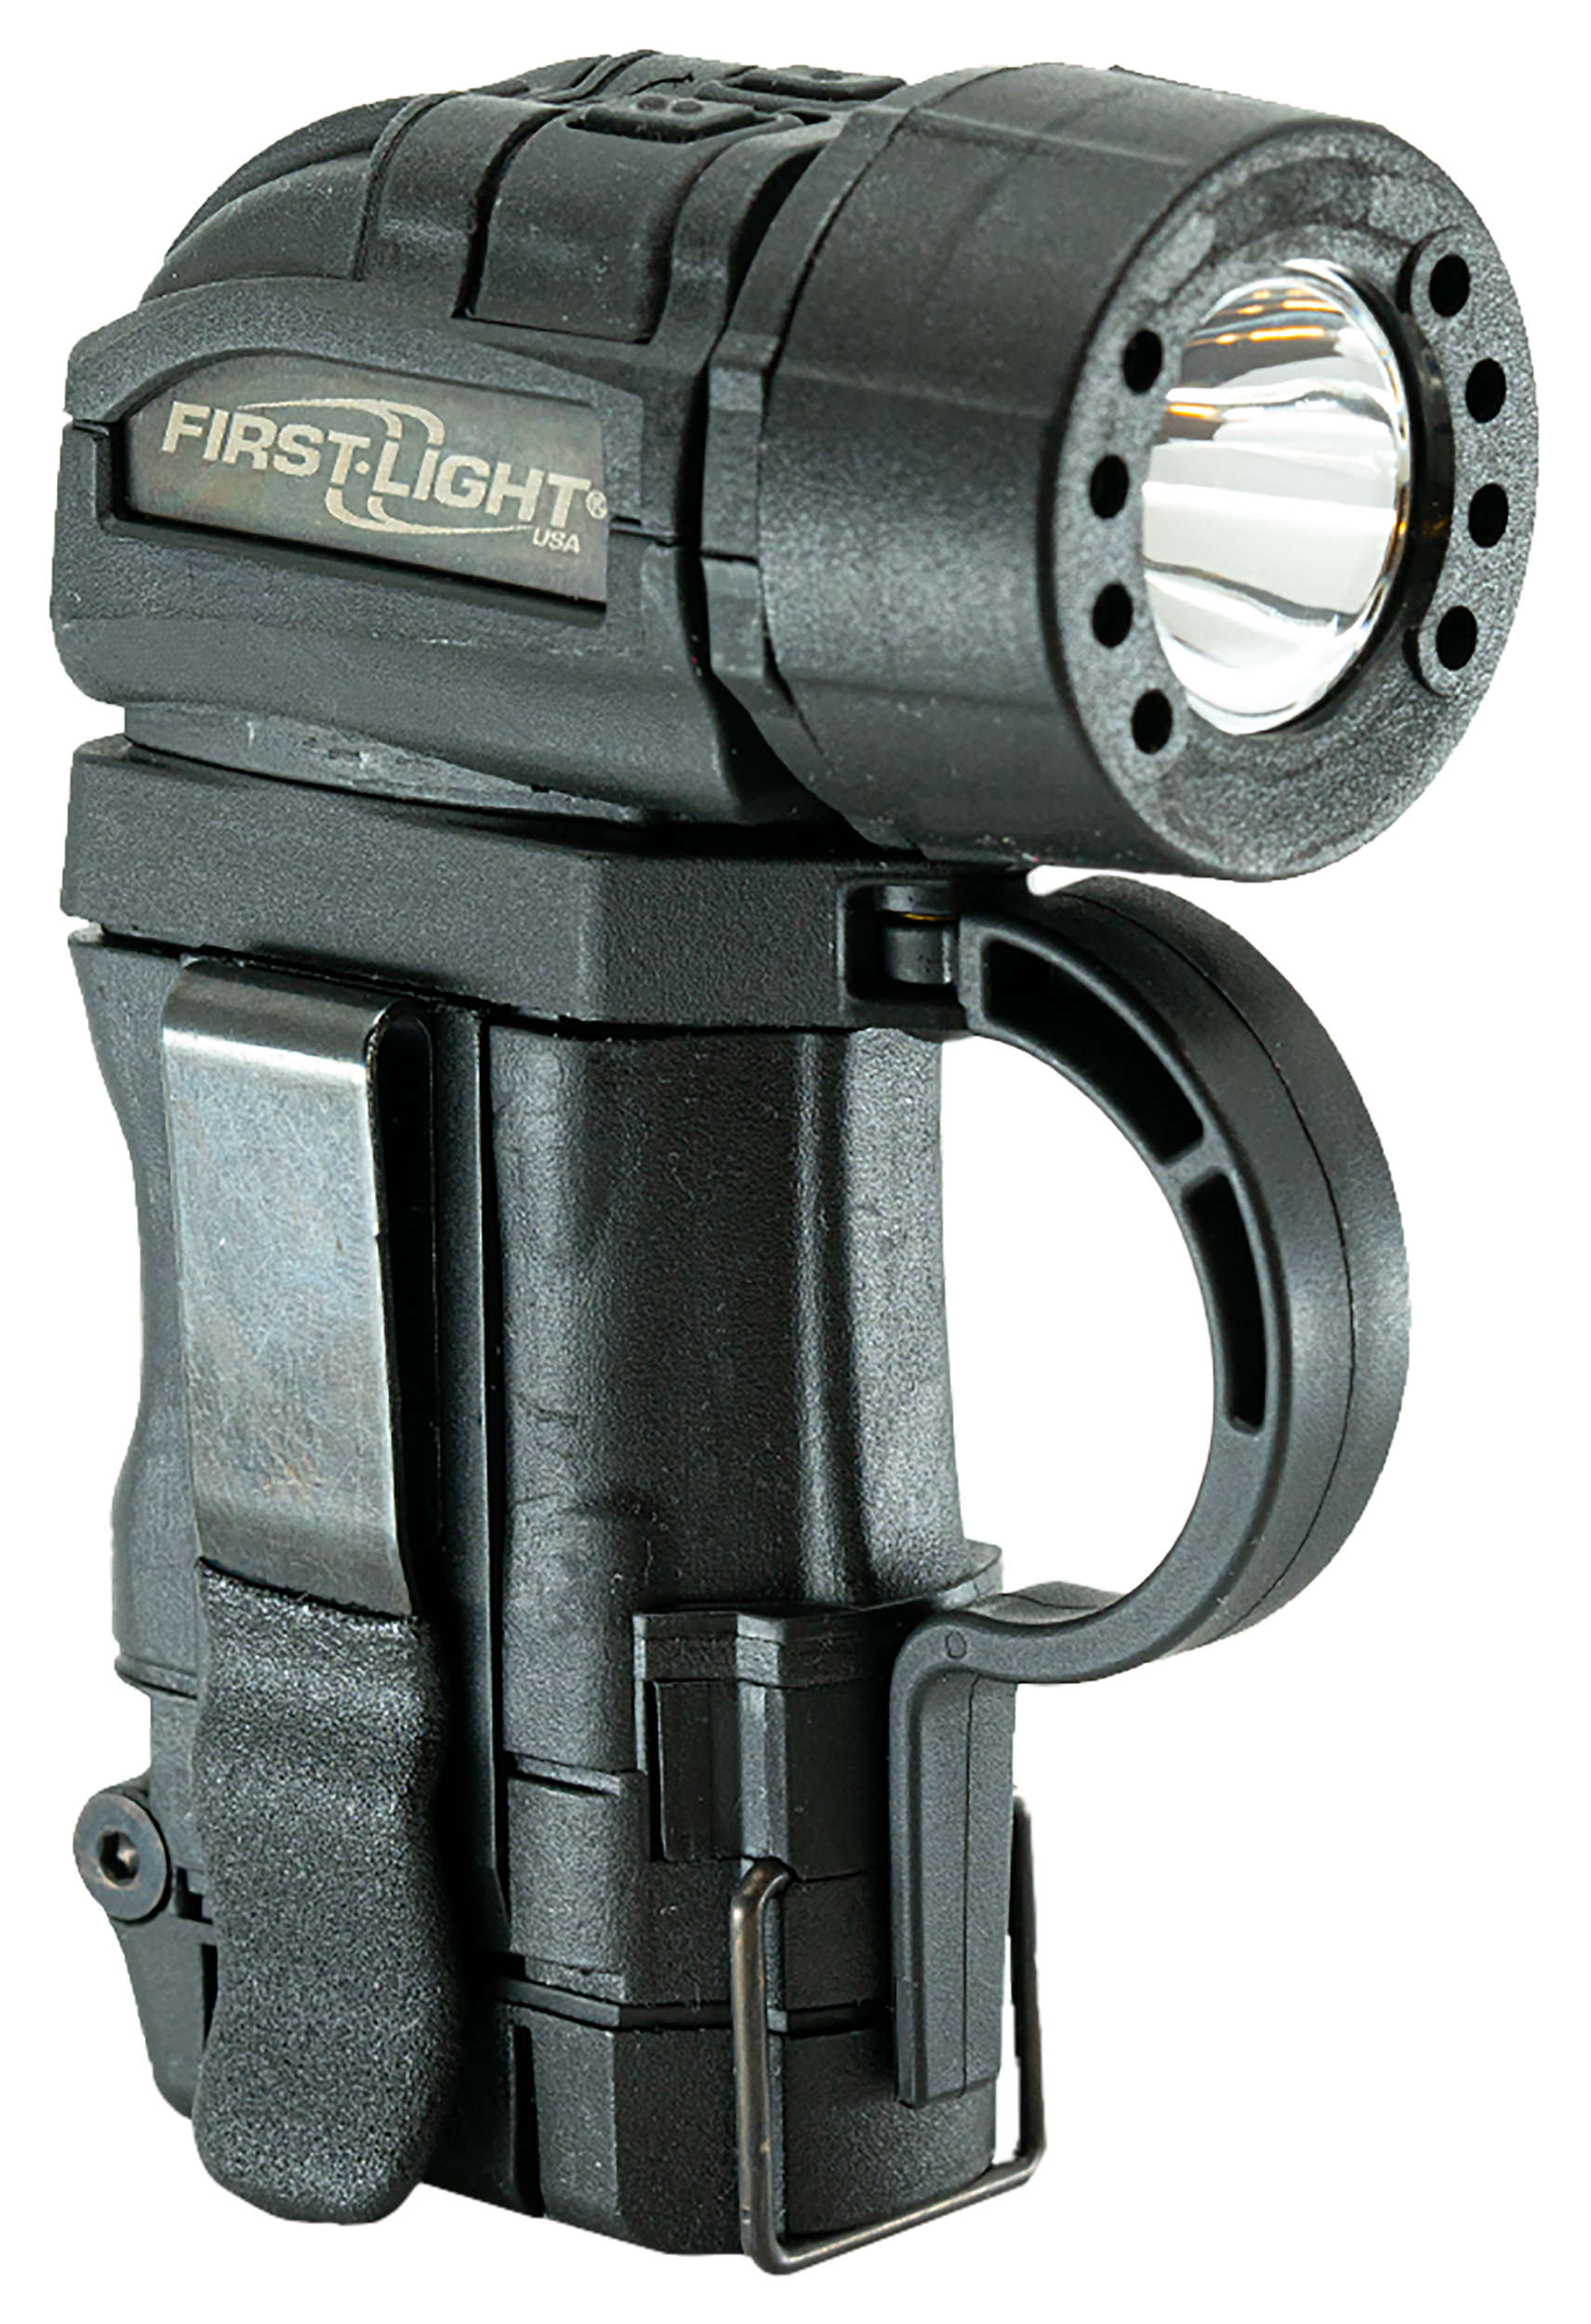 First-Light USA Torq Tactical Flashlight - Black